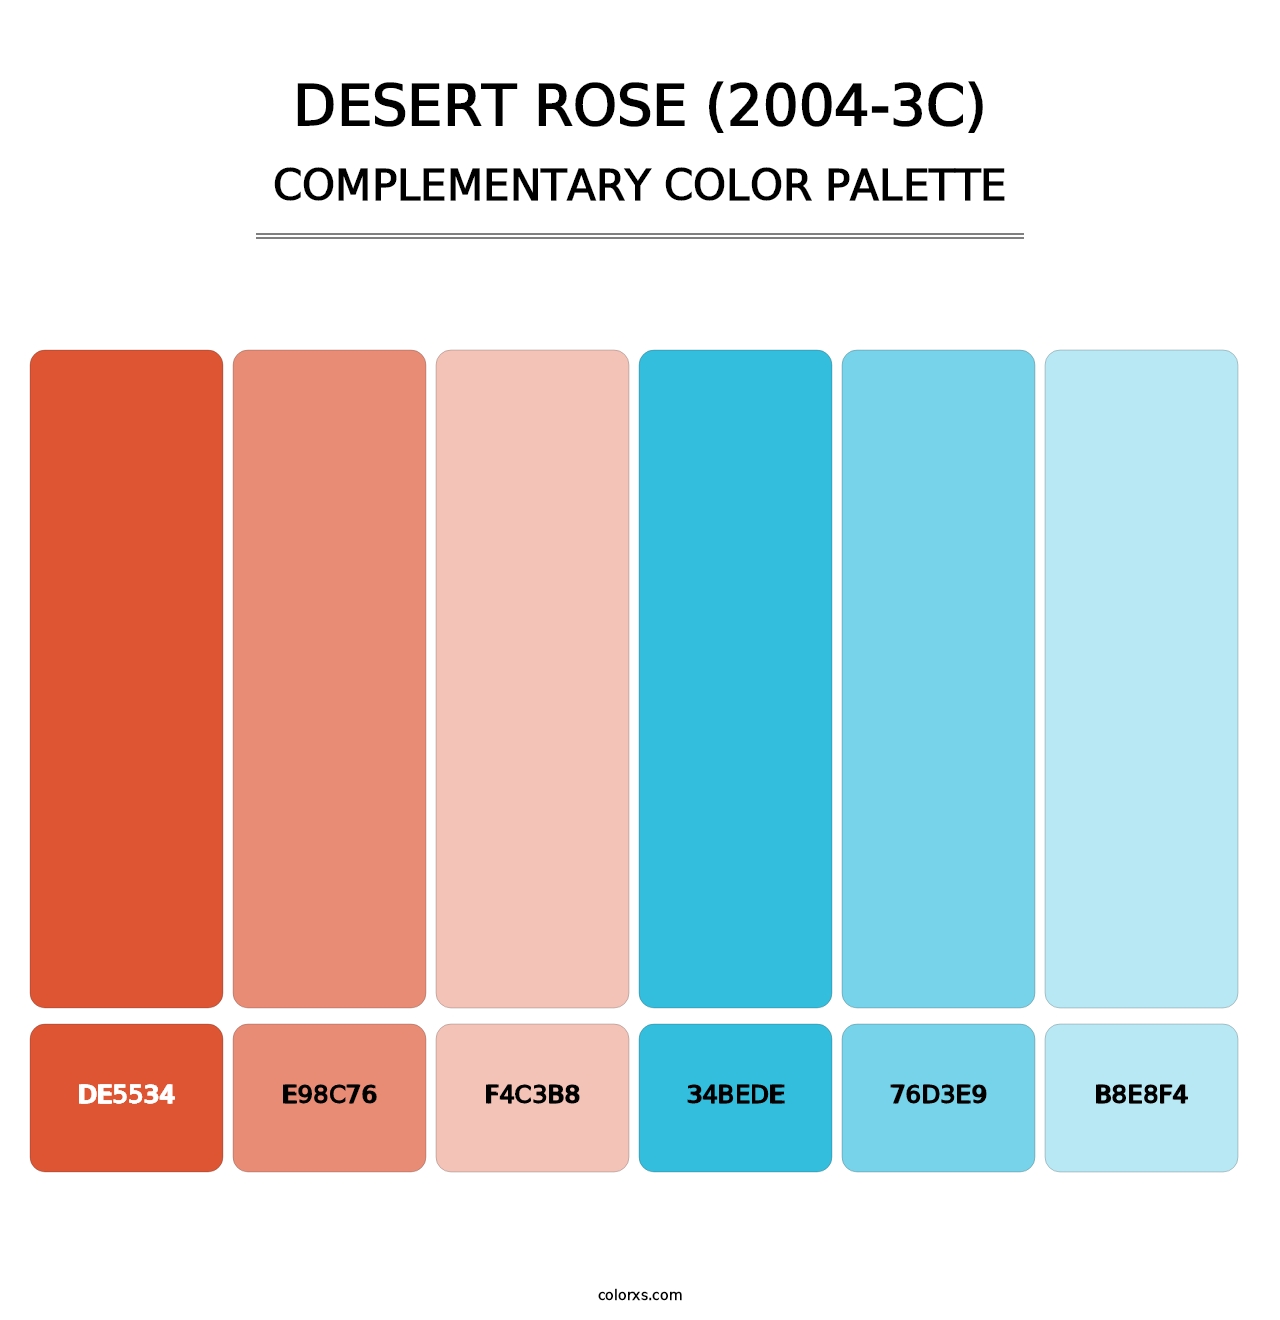 Desert Rose (2004-3C) - Complementary Color Palette